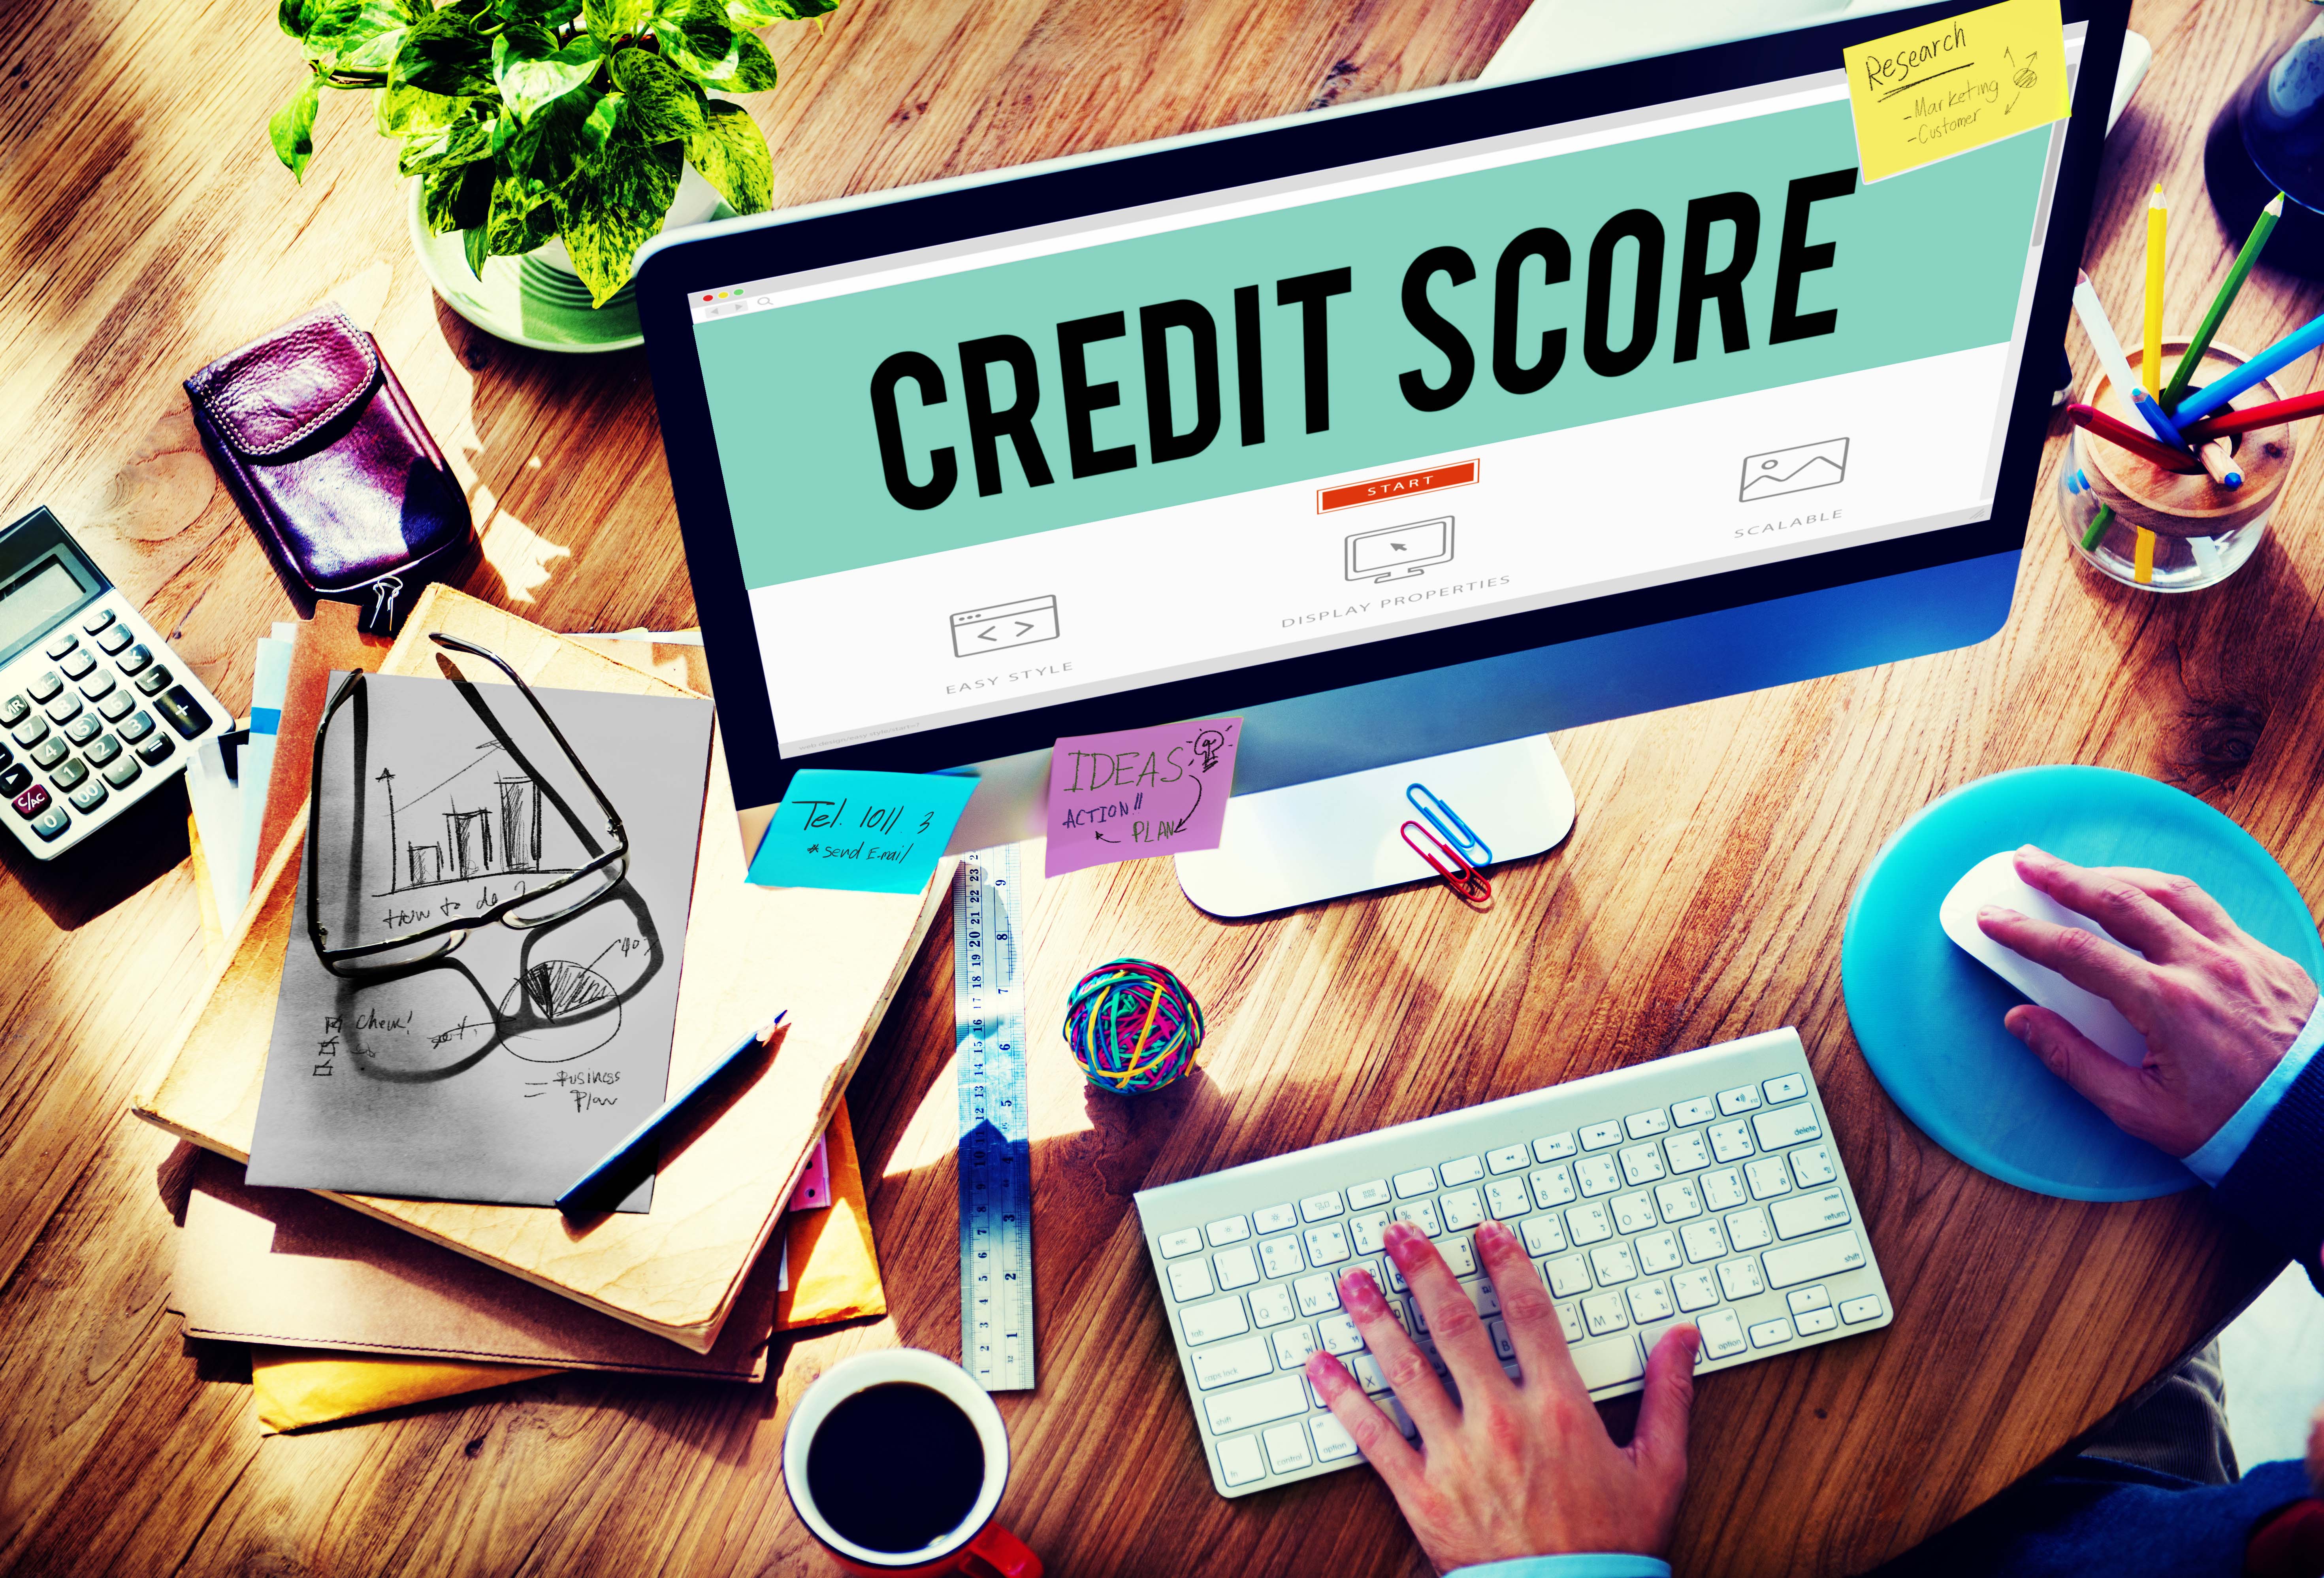 Credit Score Financial payment Rating Budget Money Concept